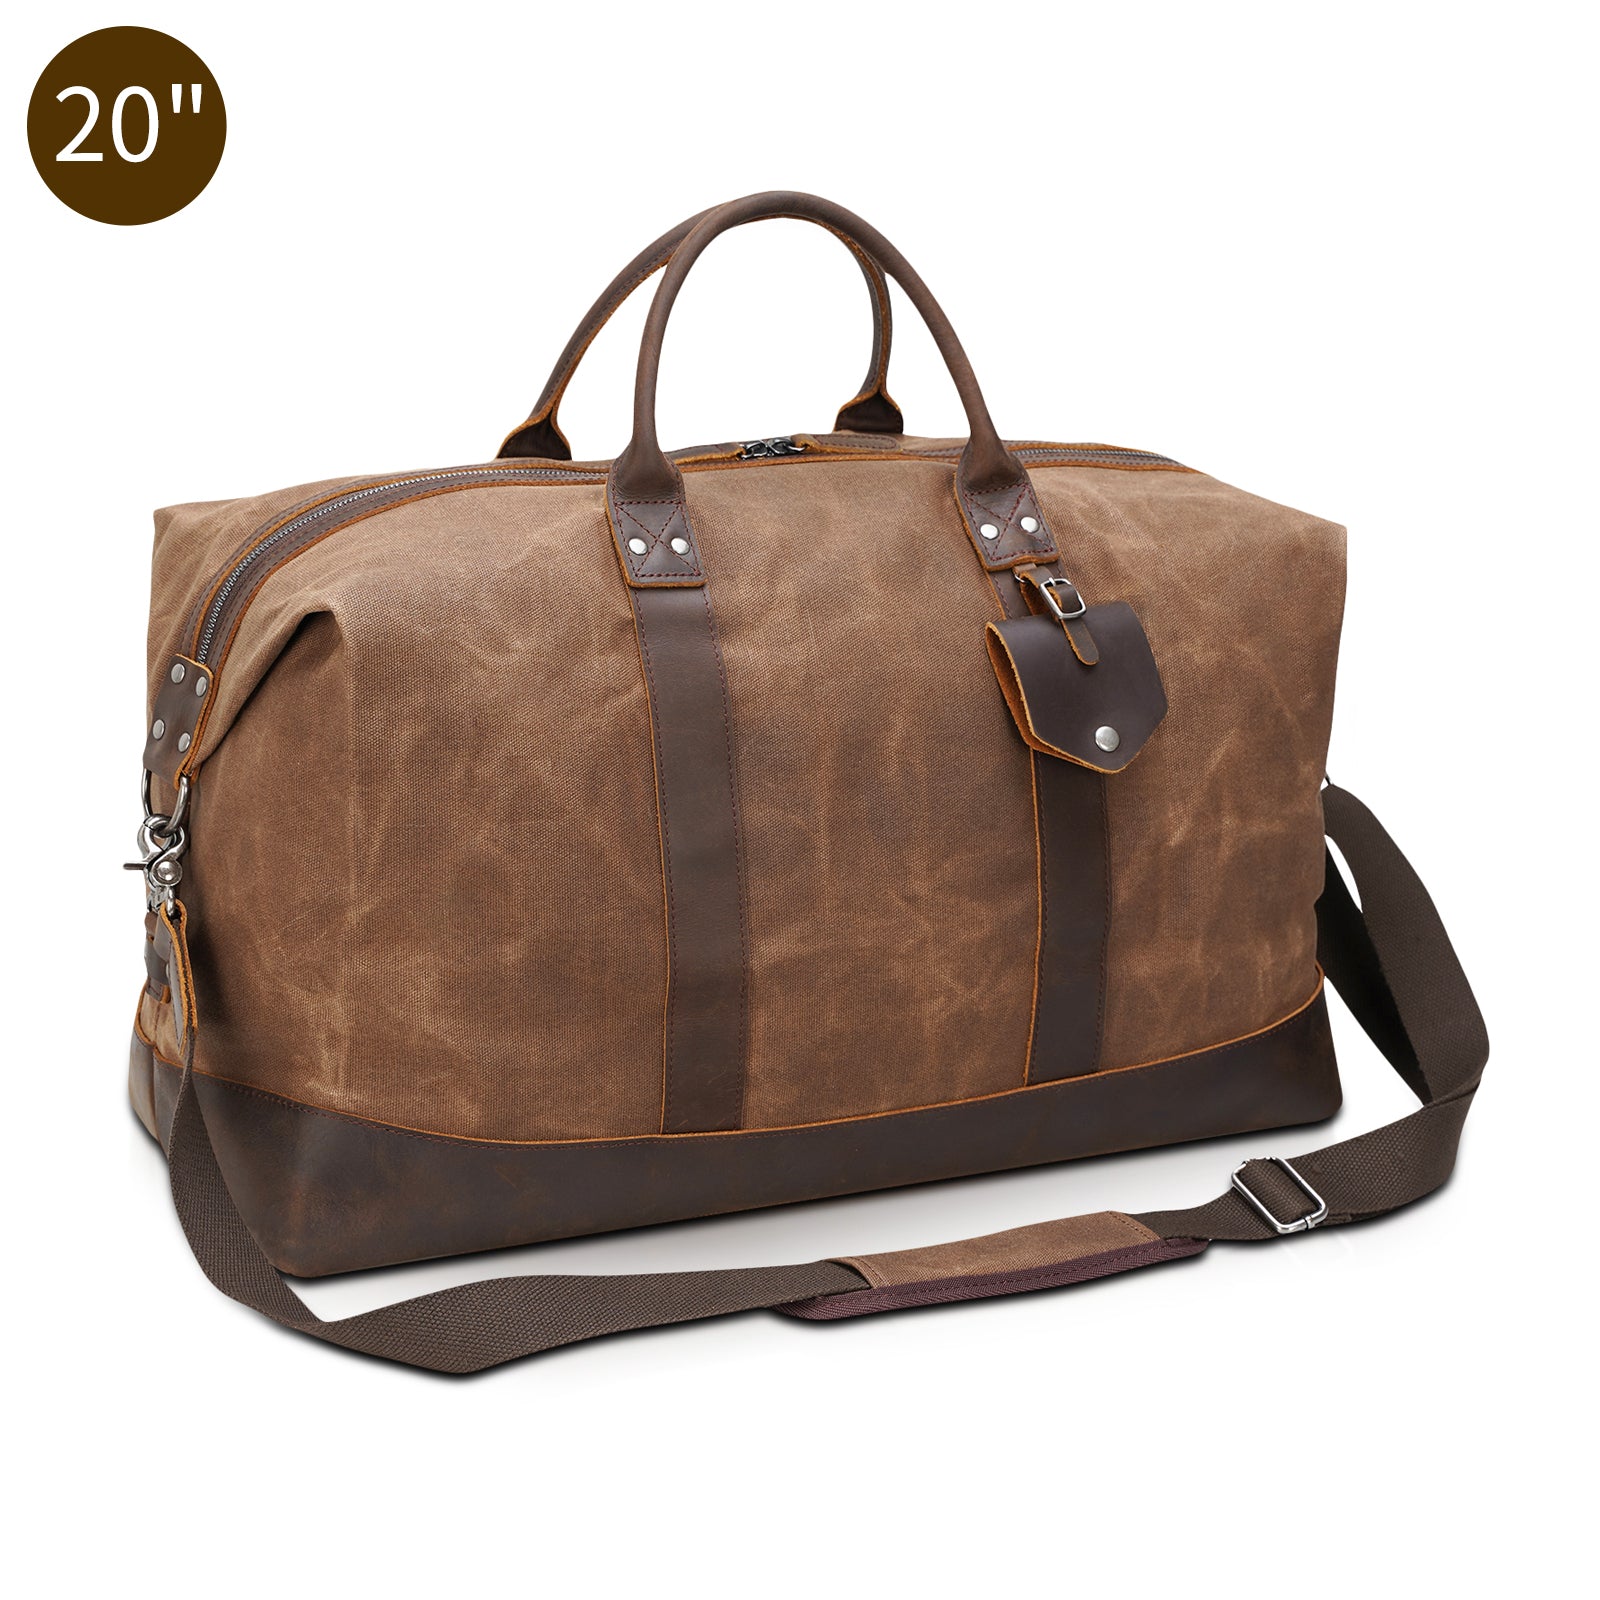 Polare 23 Duffle Weekender Overnight Travel Duffel Bag With Full Grai